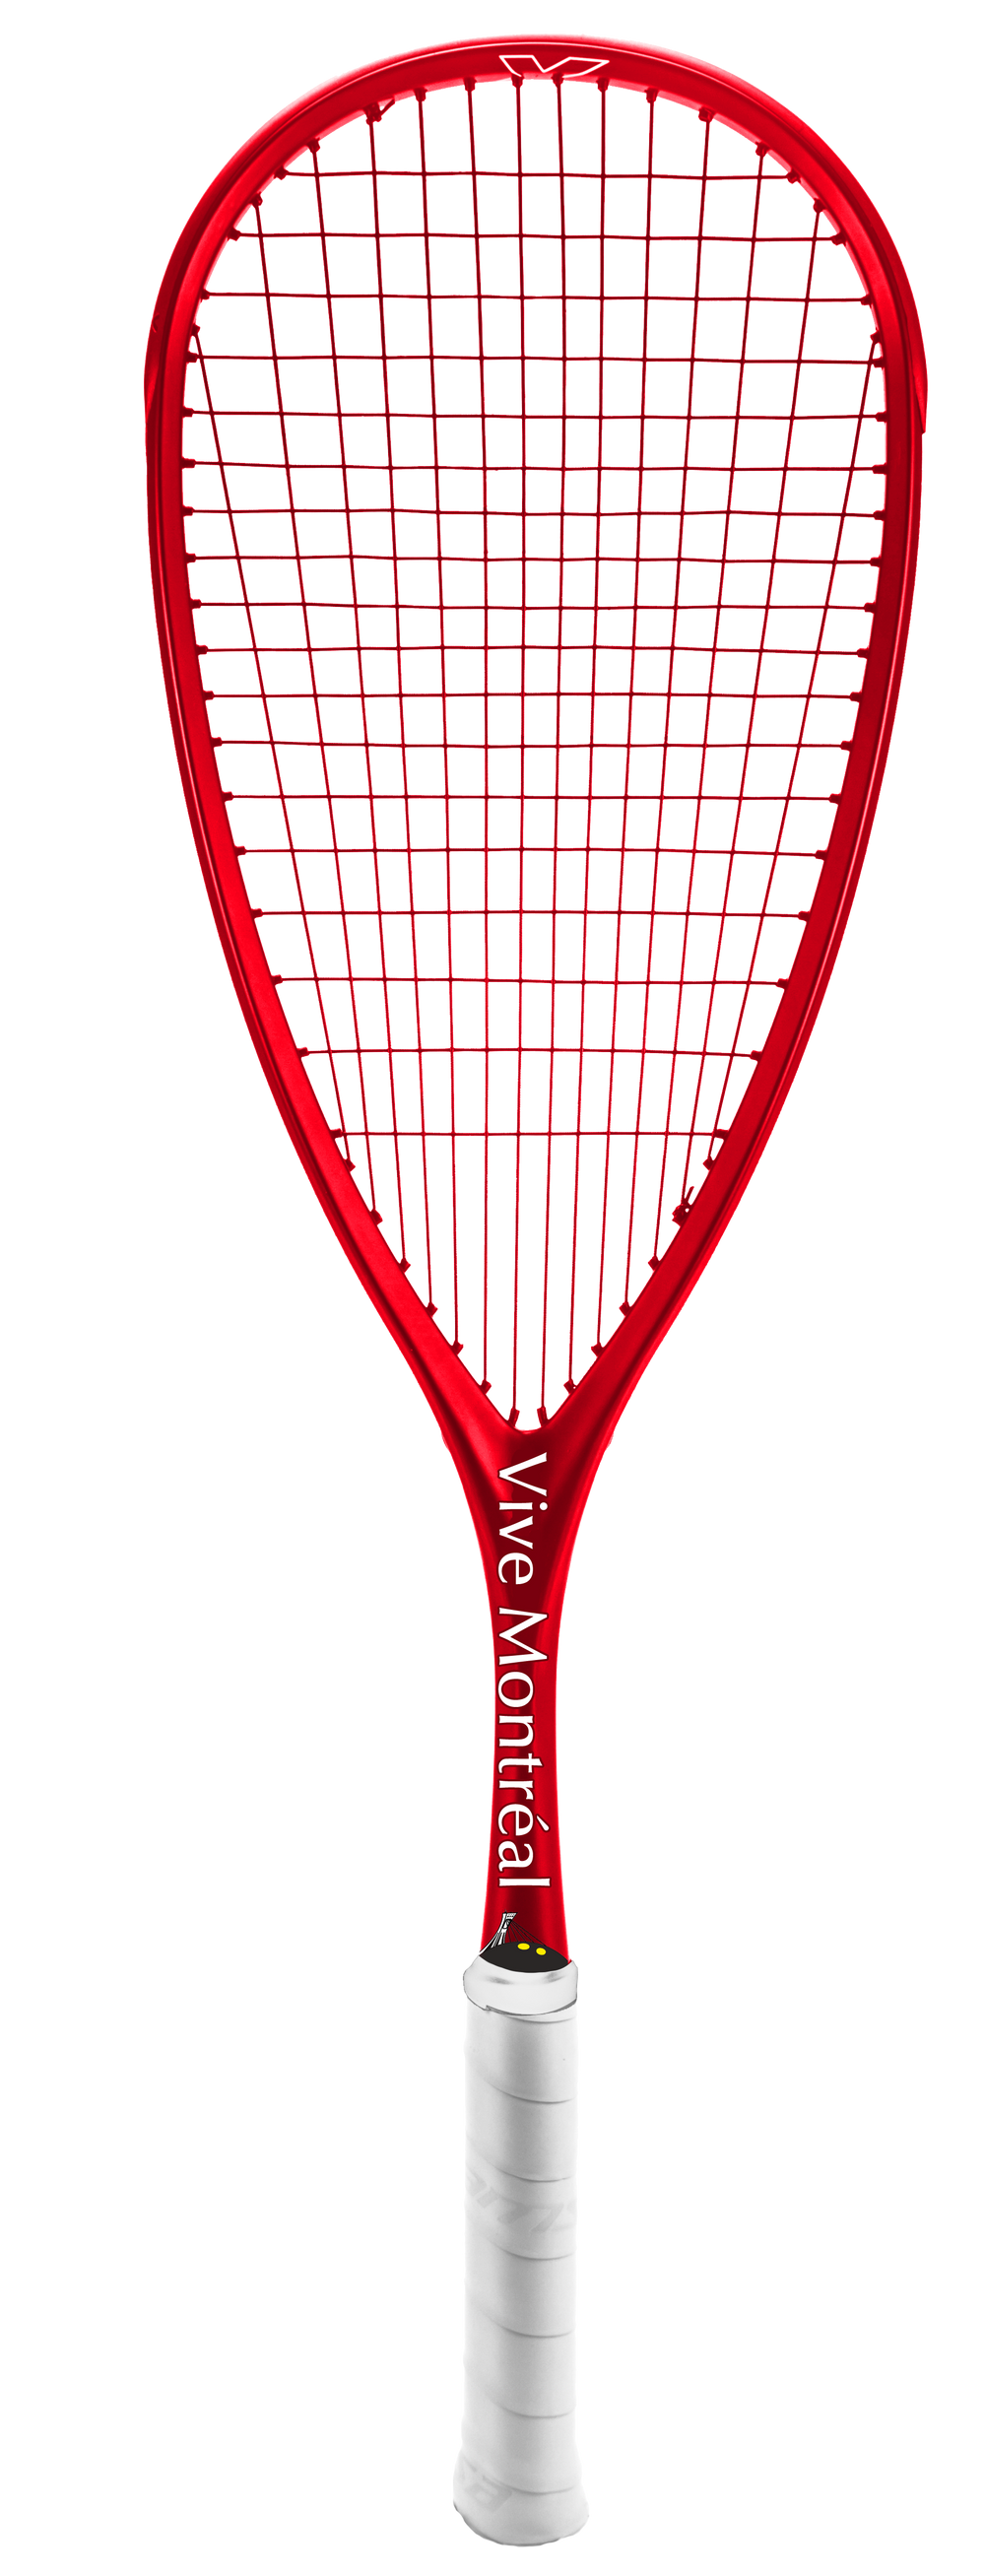 Xamsa Onyx eXposed - Vive Montreal - Limited Edition Squash Racquet Frame - Unstrung - XamsaSquash